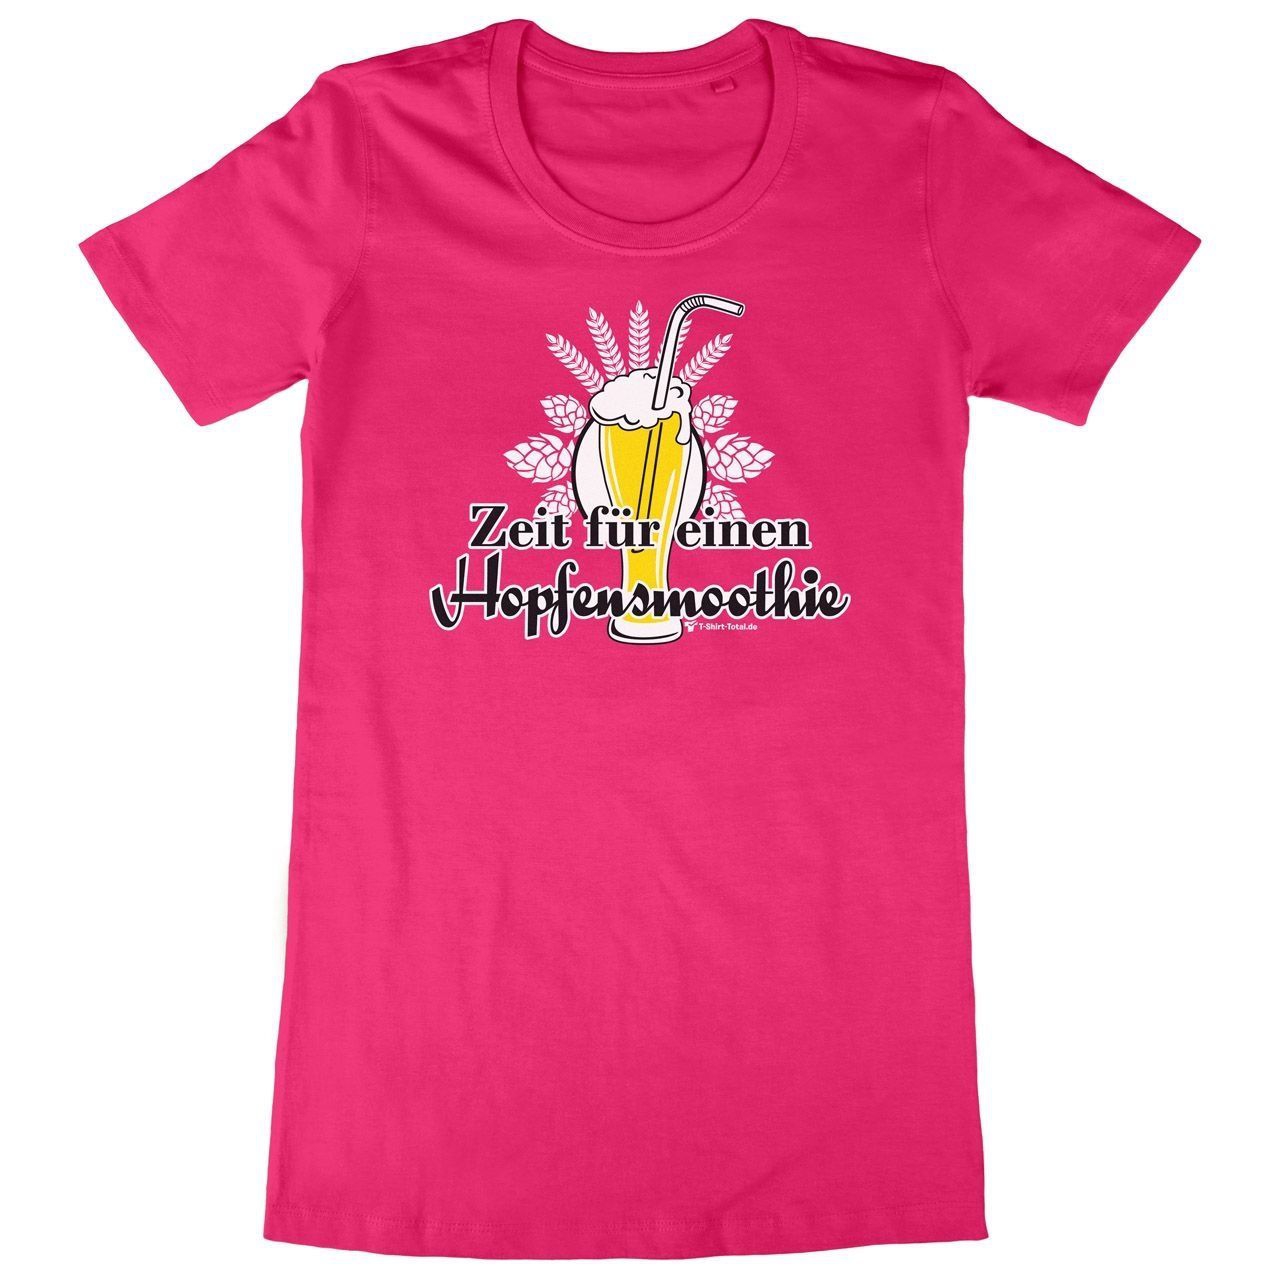 Hopfensmoothie Woman Long Shirt pink Small